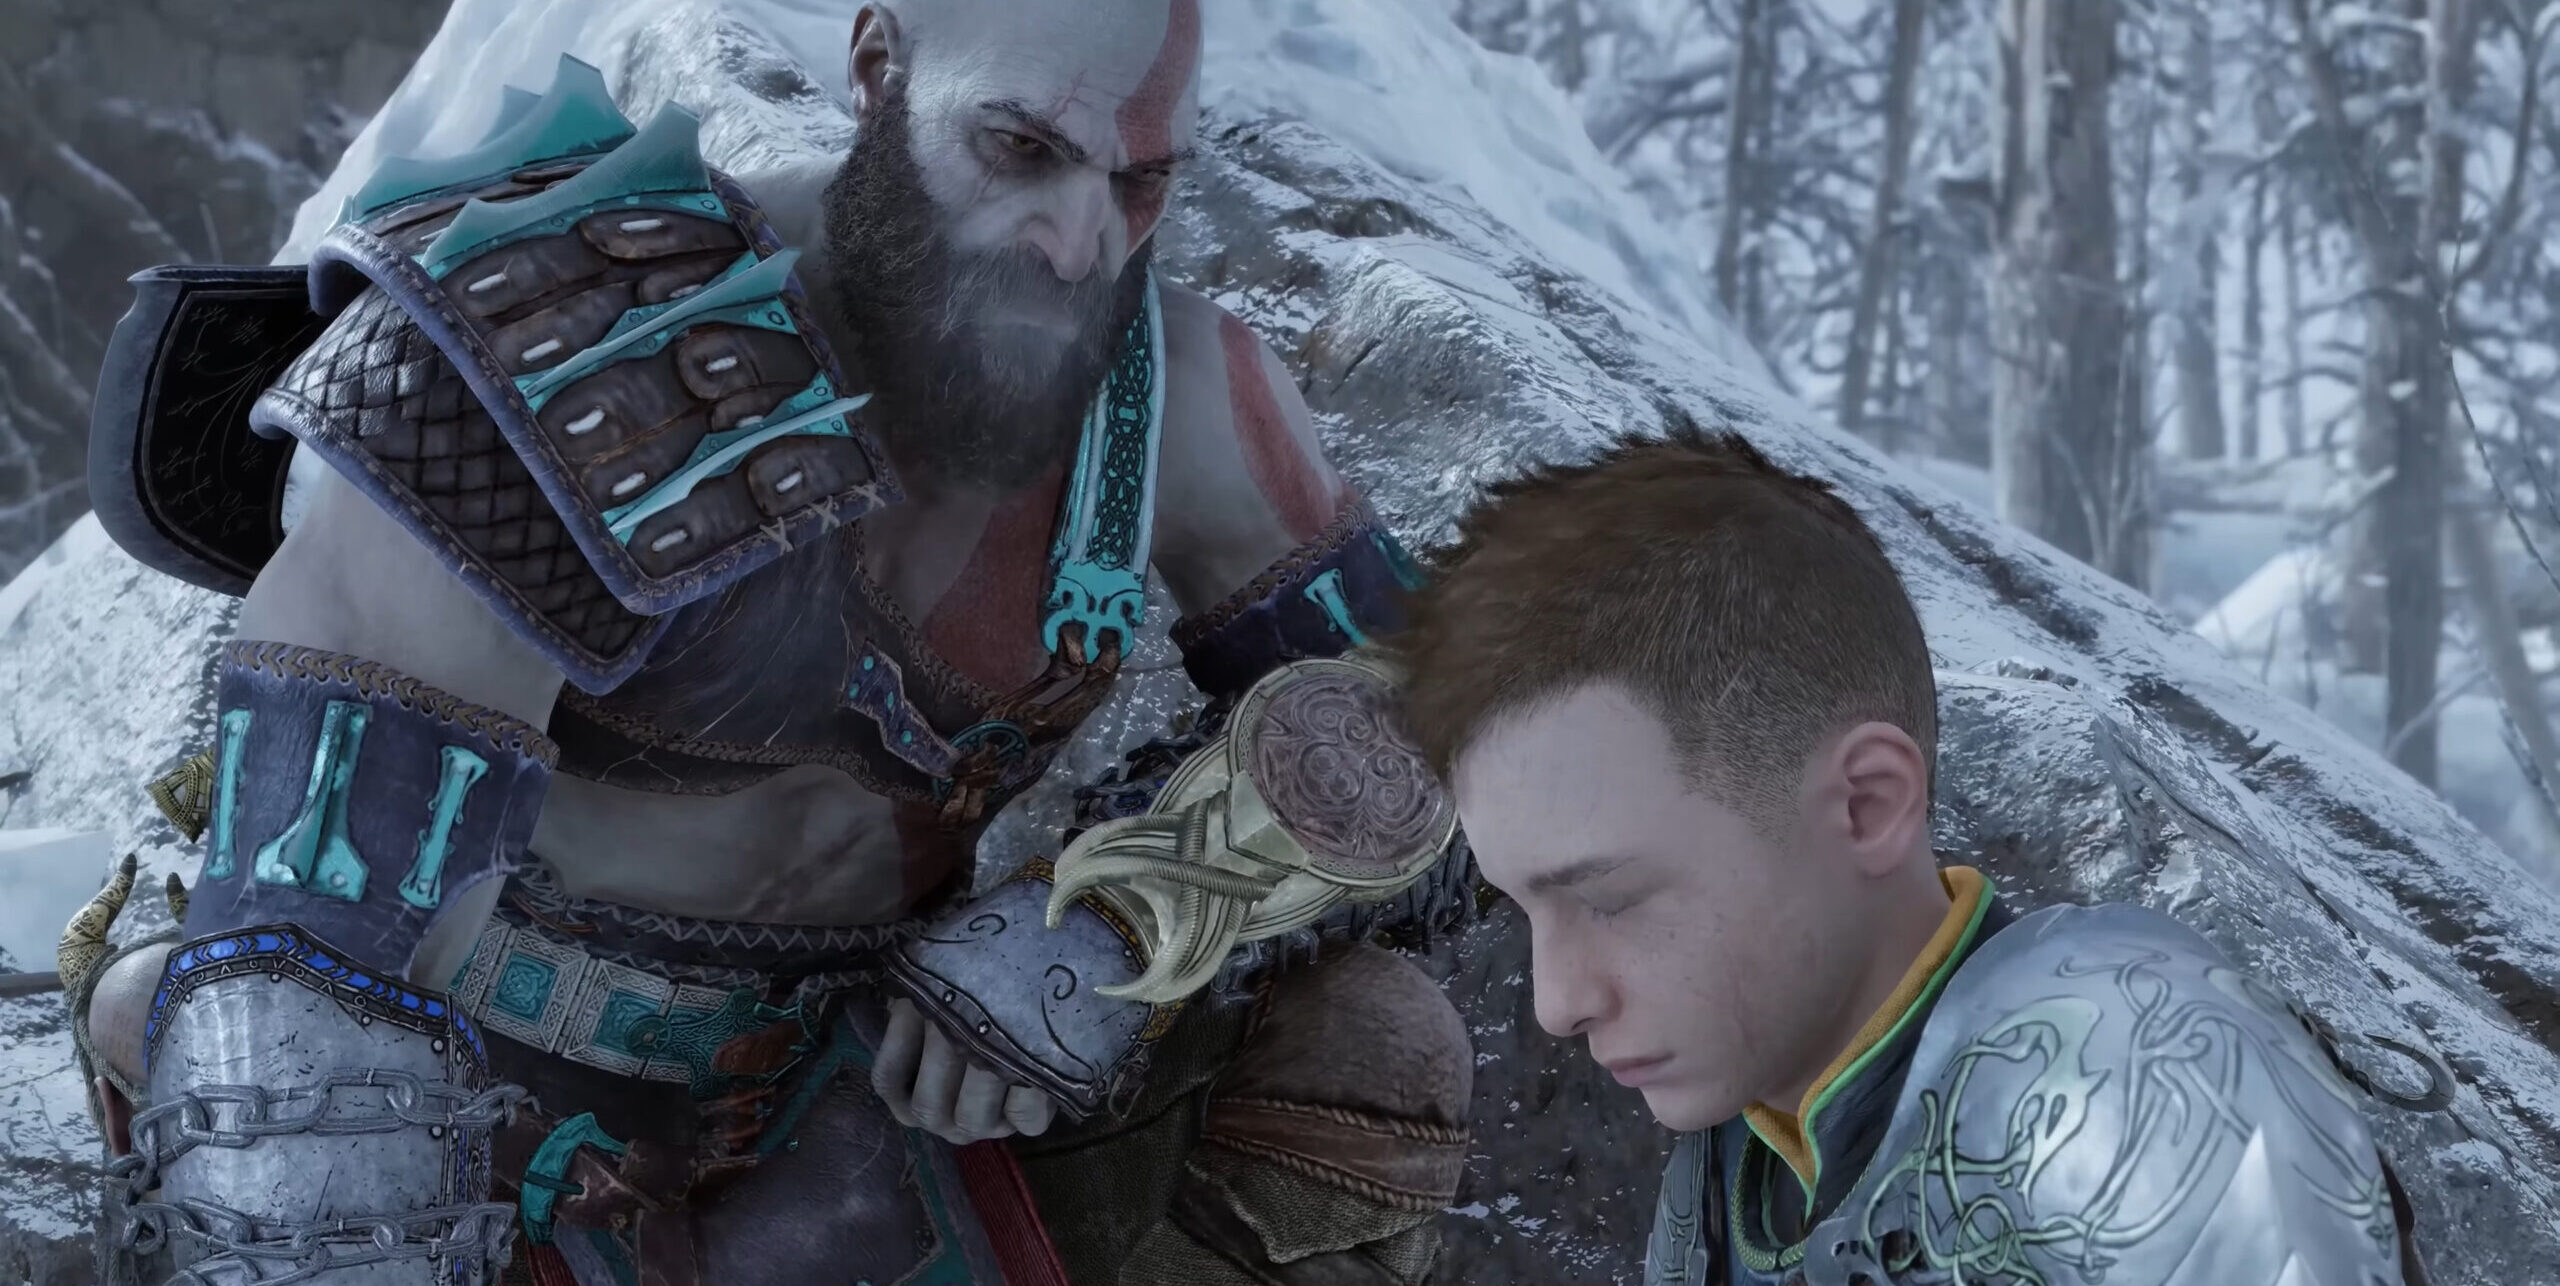 Kratos (Christopher Judge( consoles Atreus (Sunny Suljic) in God of War: Ragnarök (2022), Sony Santa Monica Studios via YouTube